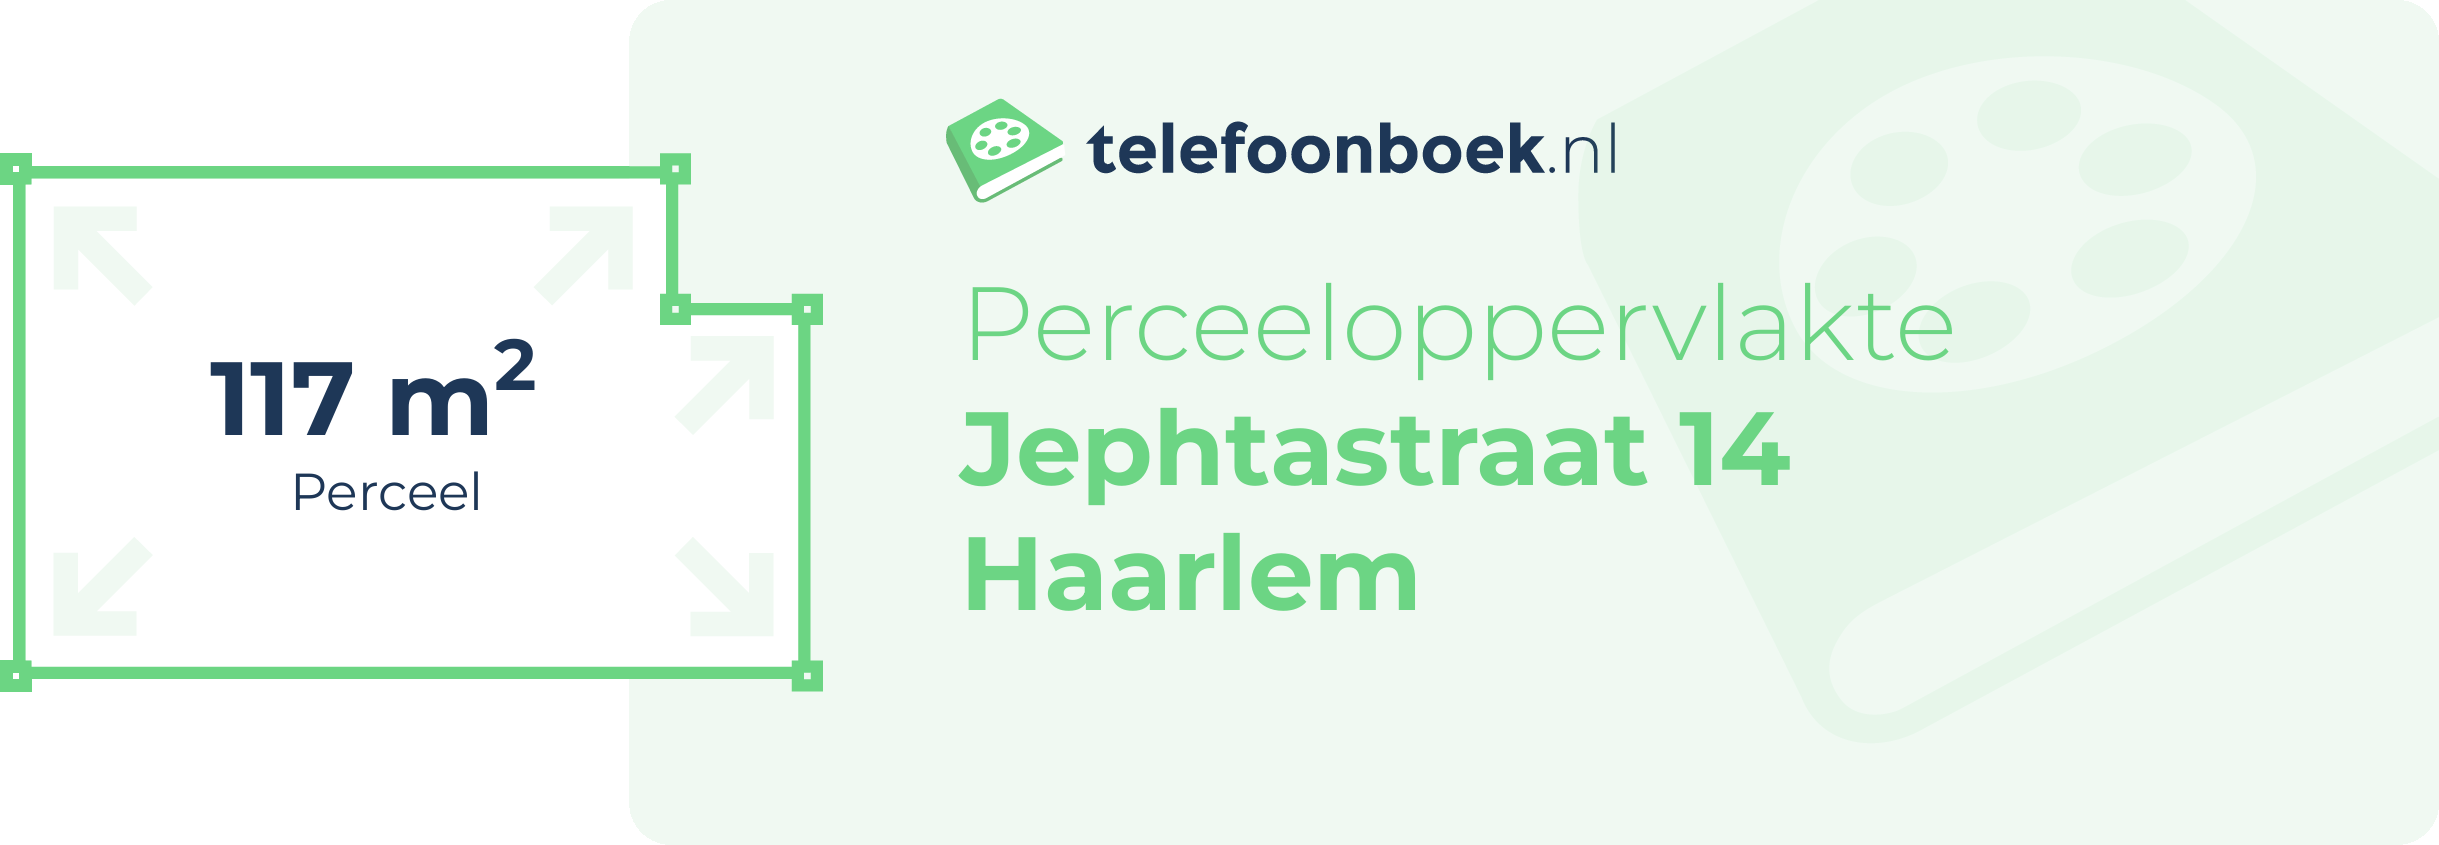 Perceeloppervlakte Jephtastraat 14 Haarlem